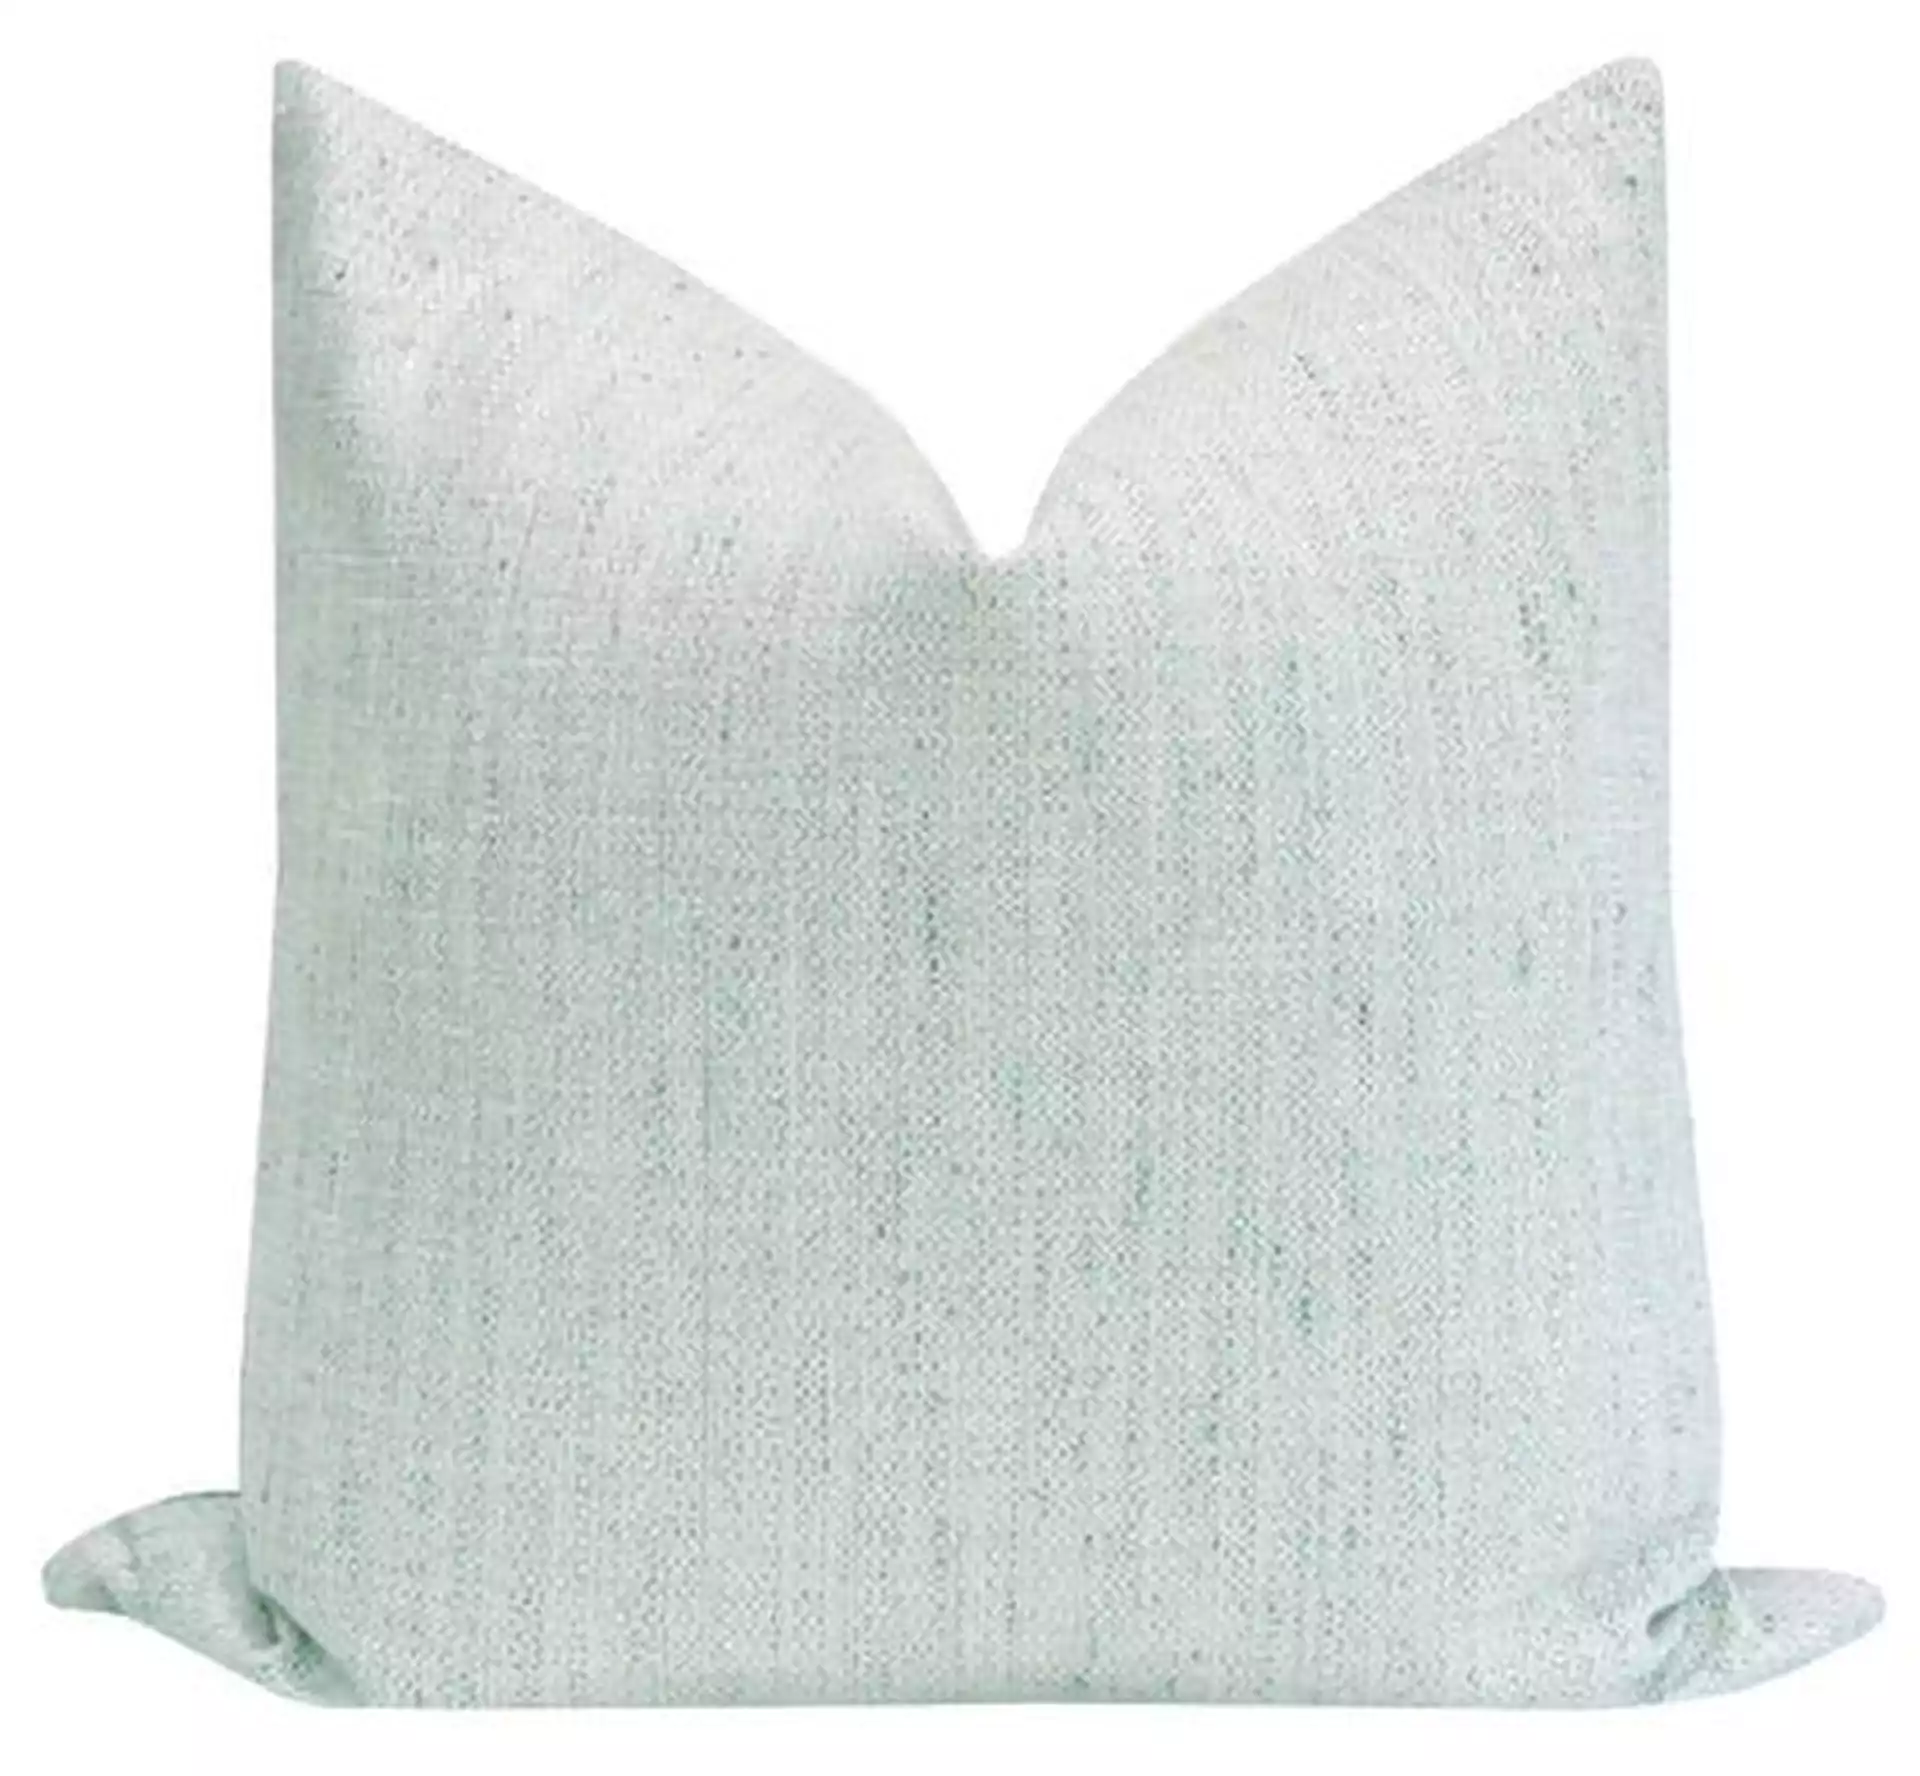 Metallic Linen Pillow Cover, Spa Blue, 18x18''